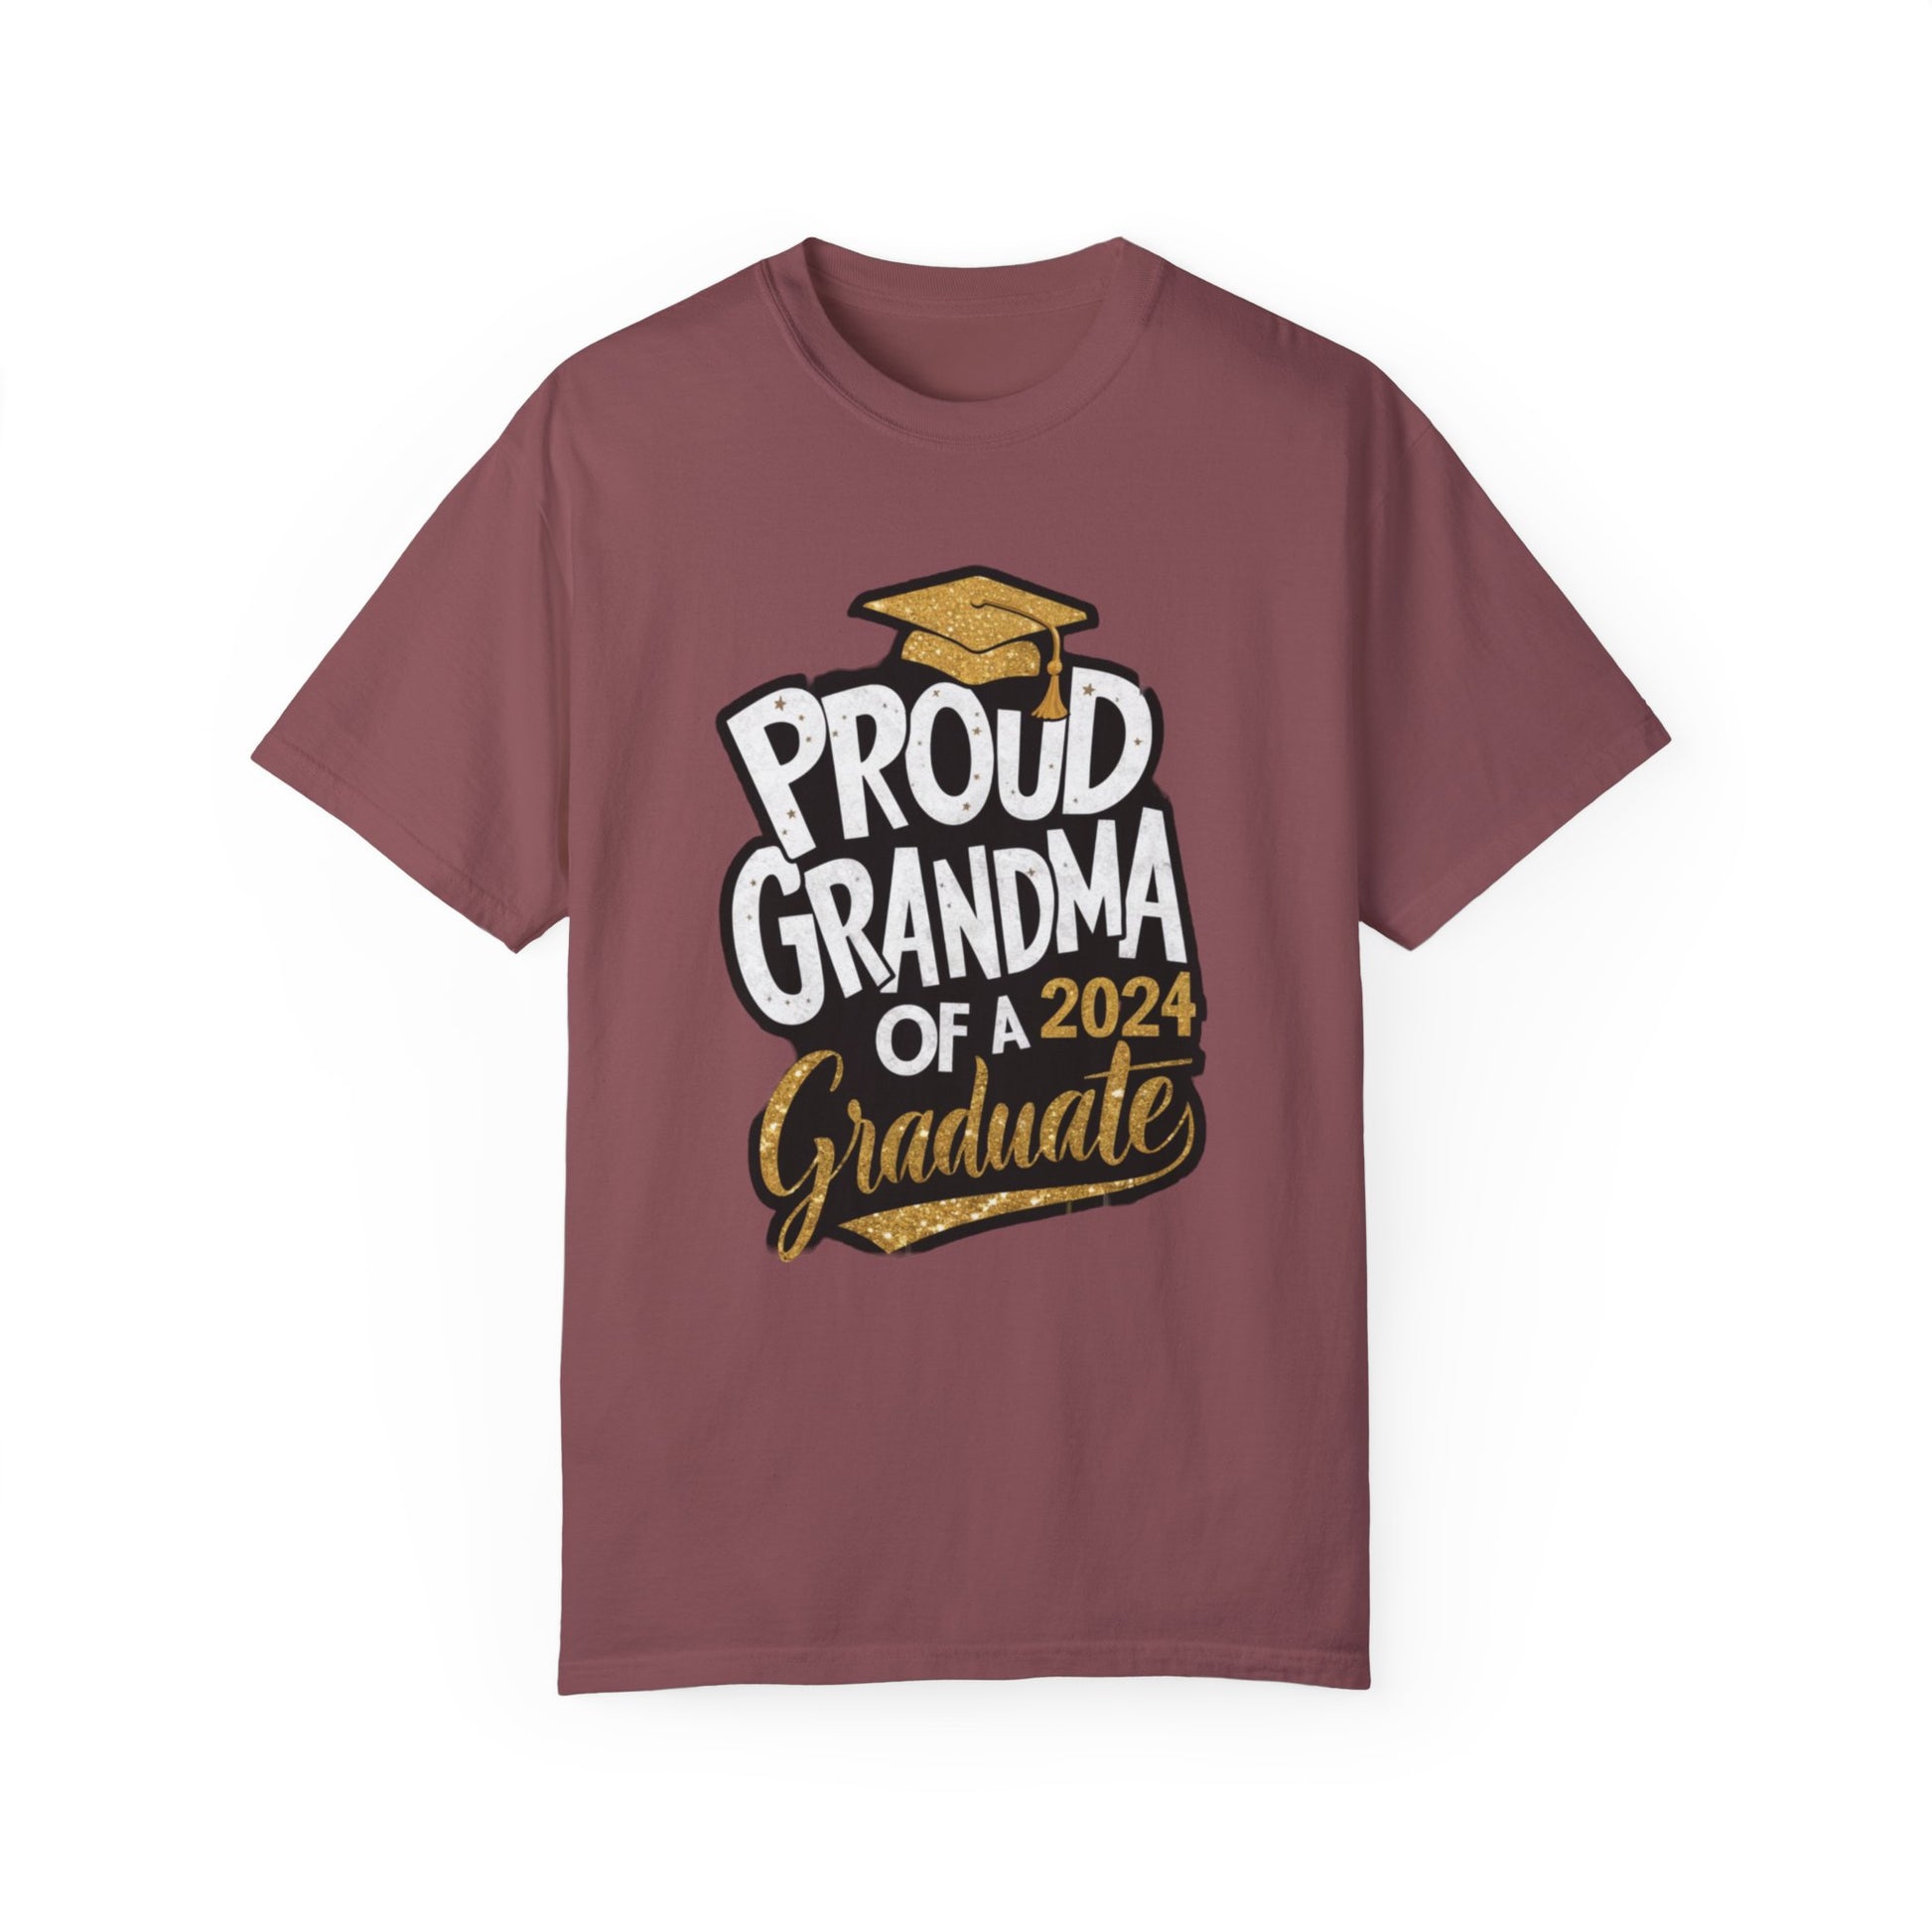 Proud of Grandma 2024 Graduate Unisex Garment-dyed T-shirt Cotton Funny Humorous Graphic Soft Premium Unisex Men Women Brick T-shirt Birthday Gift-5